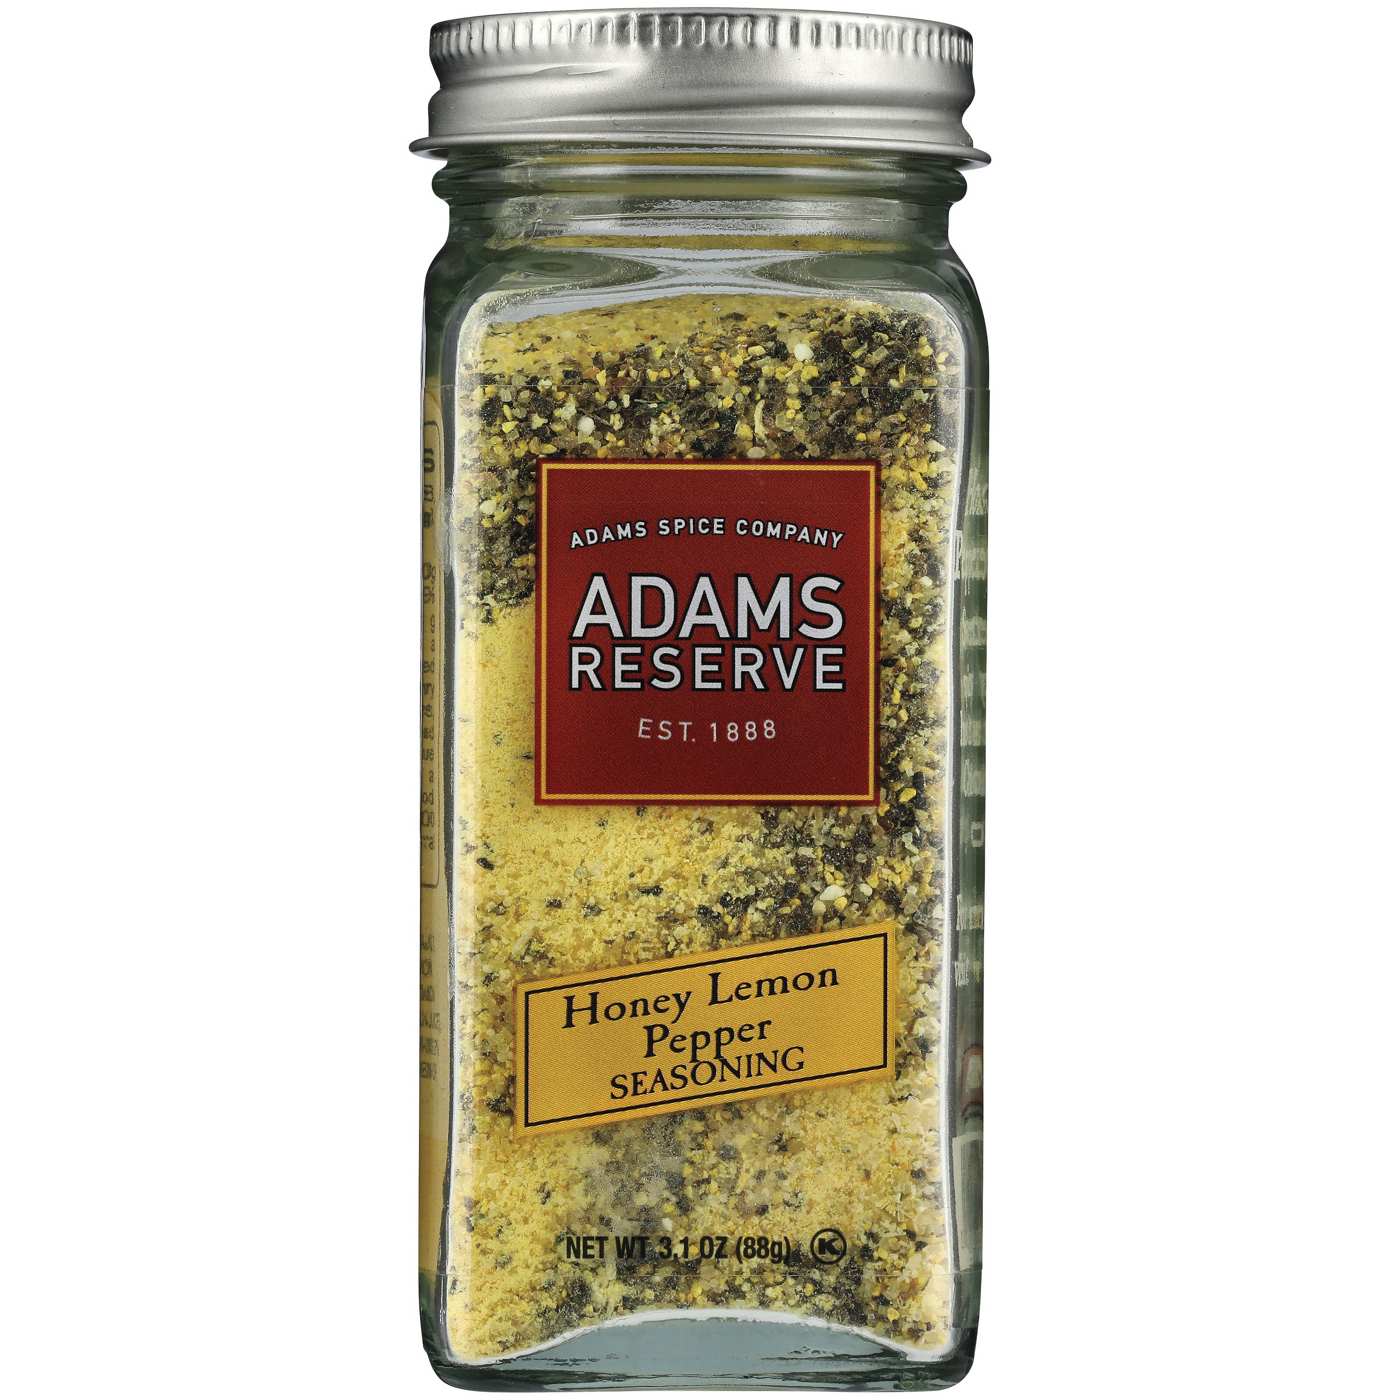 Adams Reserve Honey Lemon Pepper Seasoning; image 1 of 2